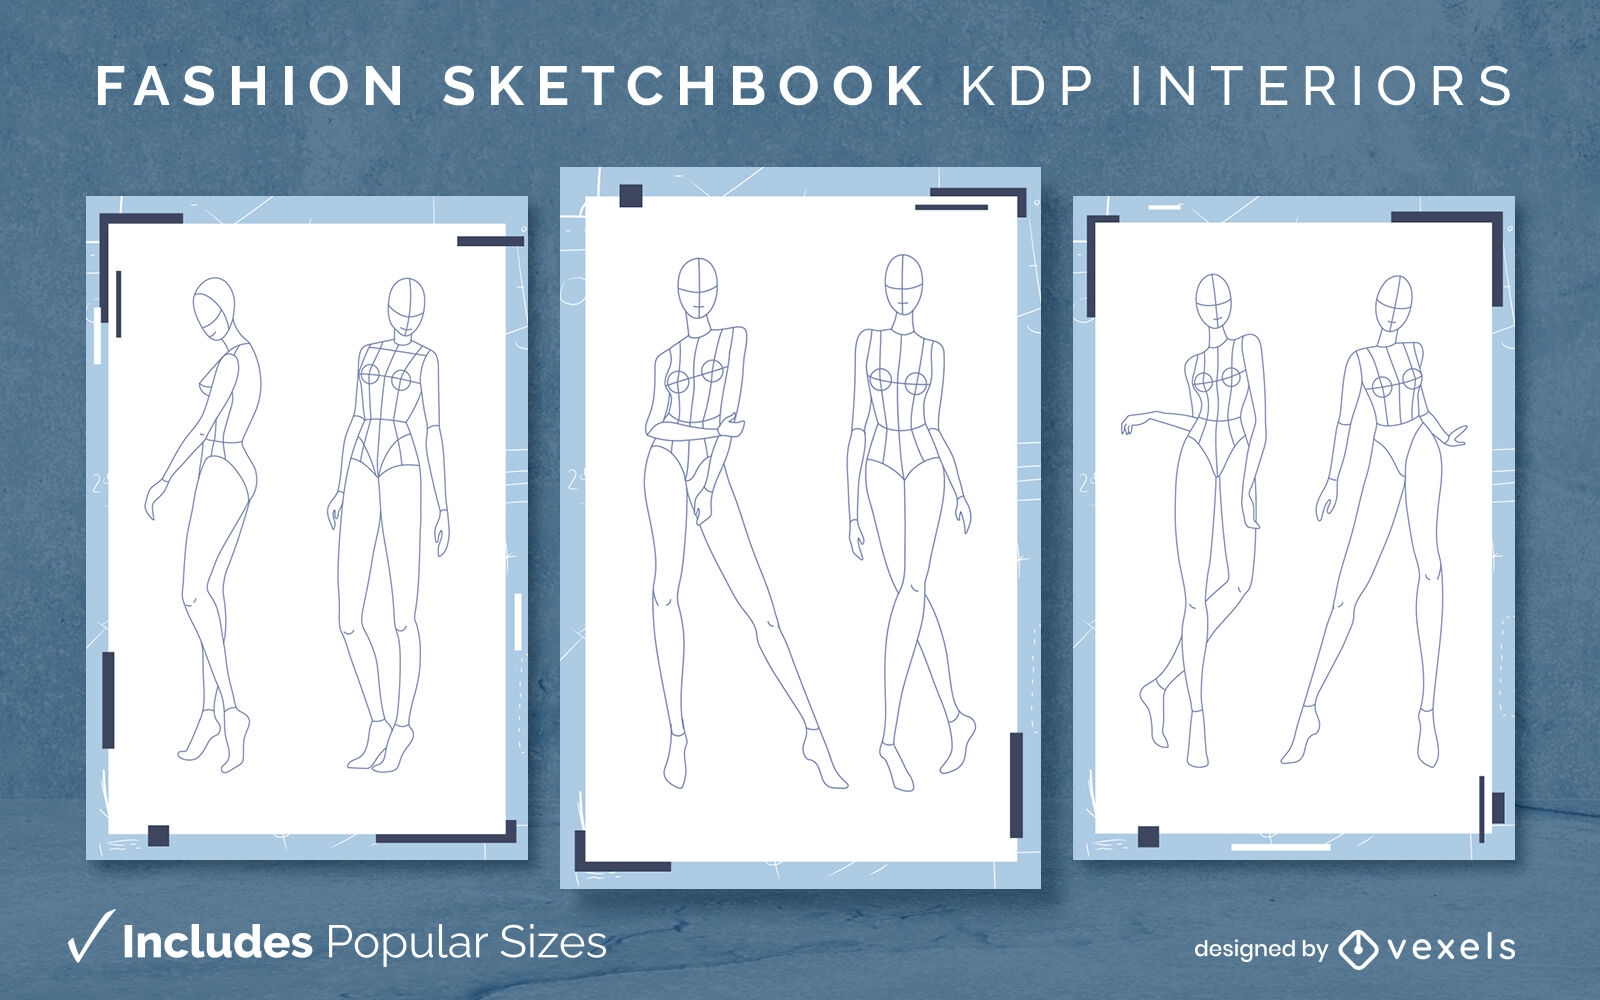 Tattoo Sketchbook(KDP Interior) Graphic by Boss Designer